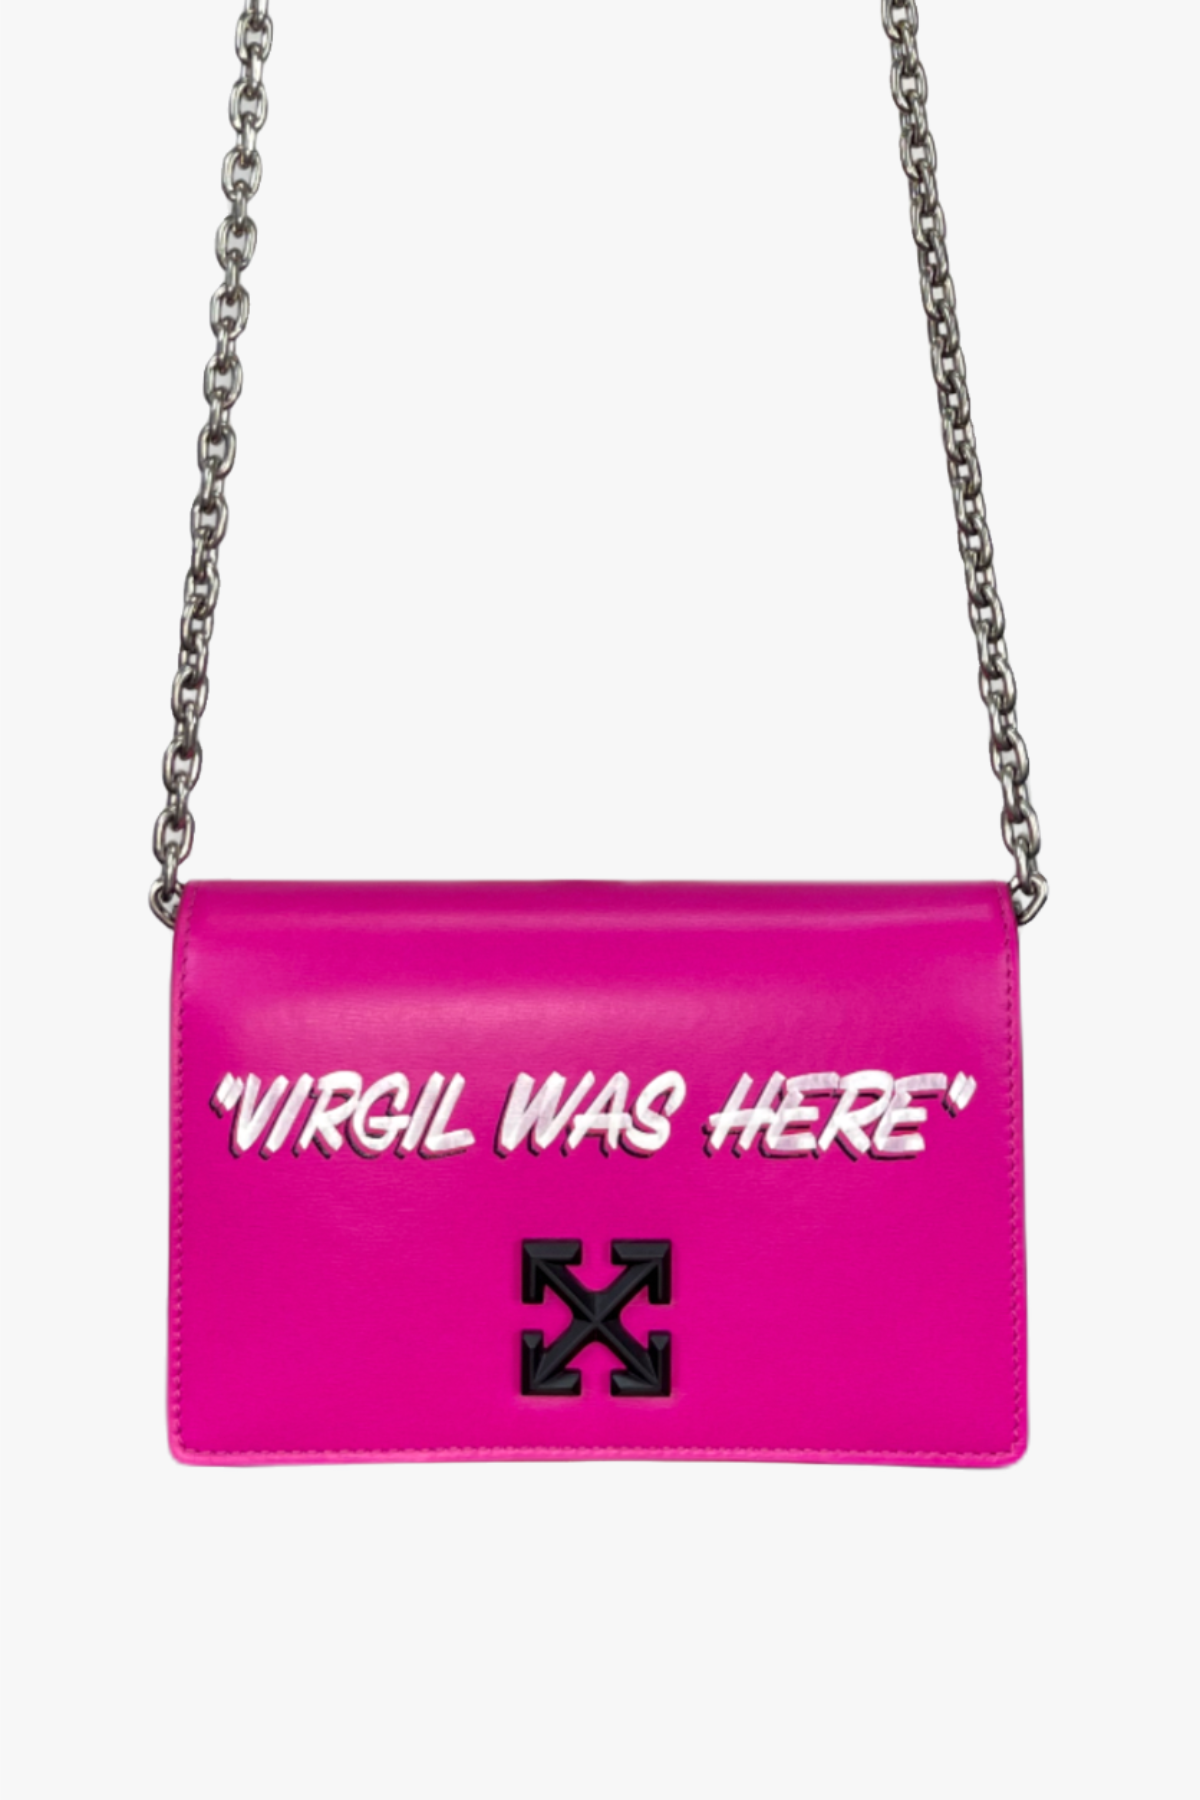 Off-White "Virgil Was Here" Hot Pink Handbag NWT